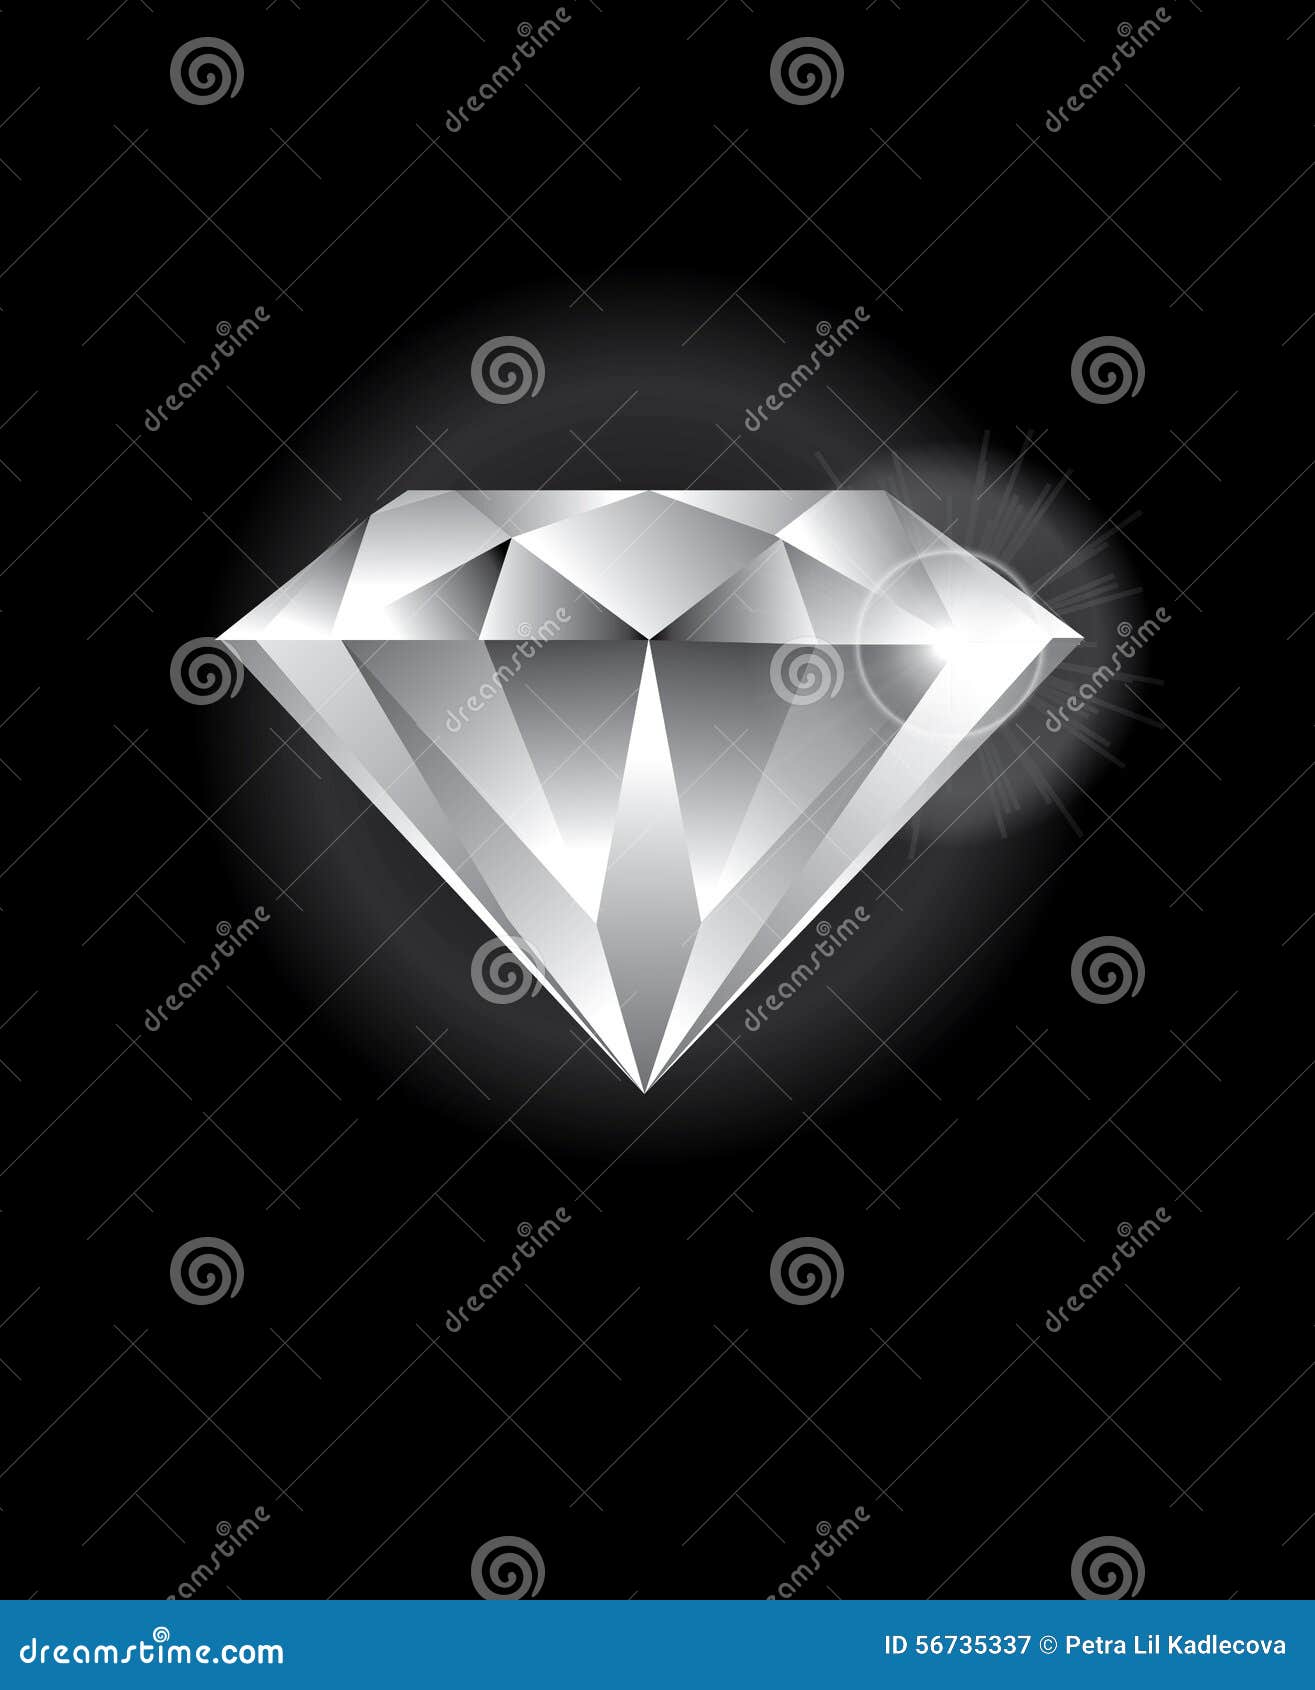 Diamond Quality Guide: How To Buy The 4 C's Diamonds. – Noray Designs